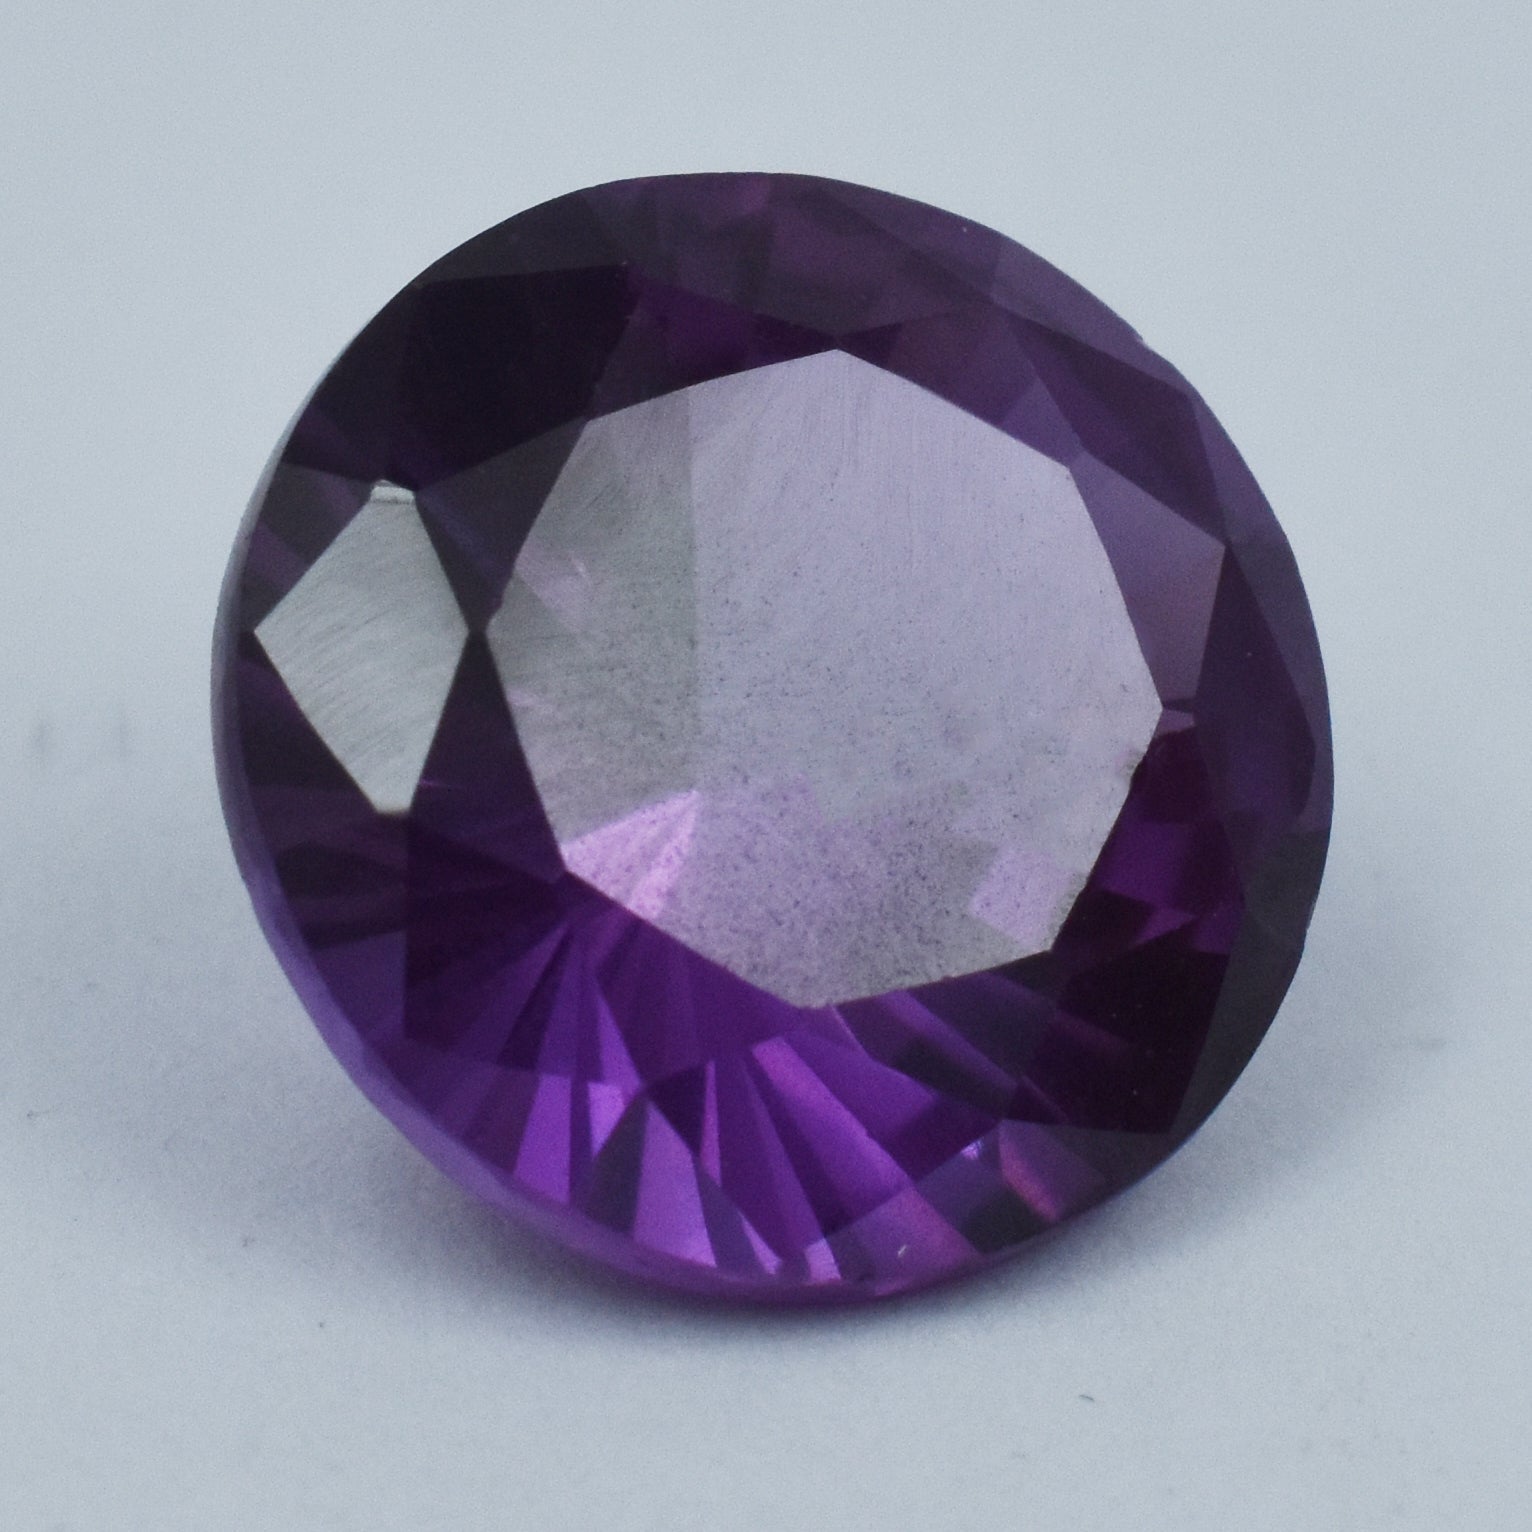 Beautiful Round Cut Purple Tanzanite 9.10 Carat Certified Natural Loose Gemstone Amazing Offer On Tanzanite Gem With Gift